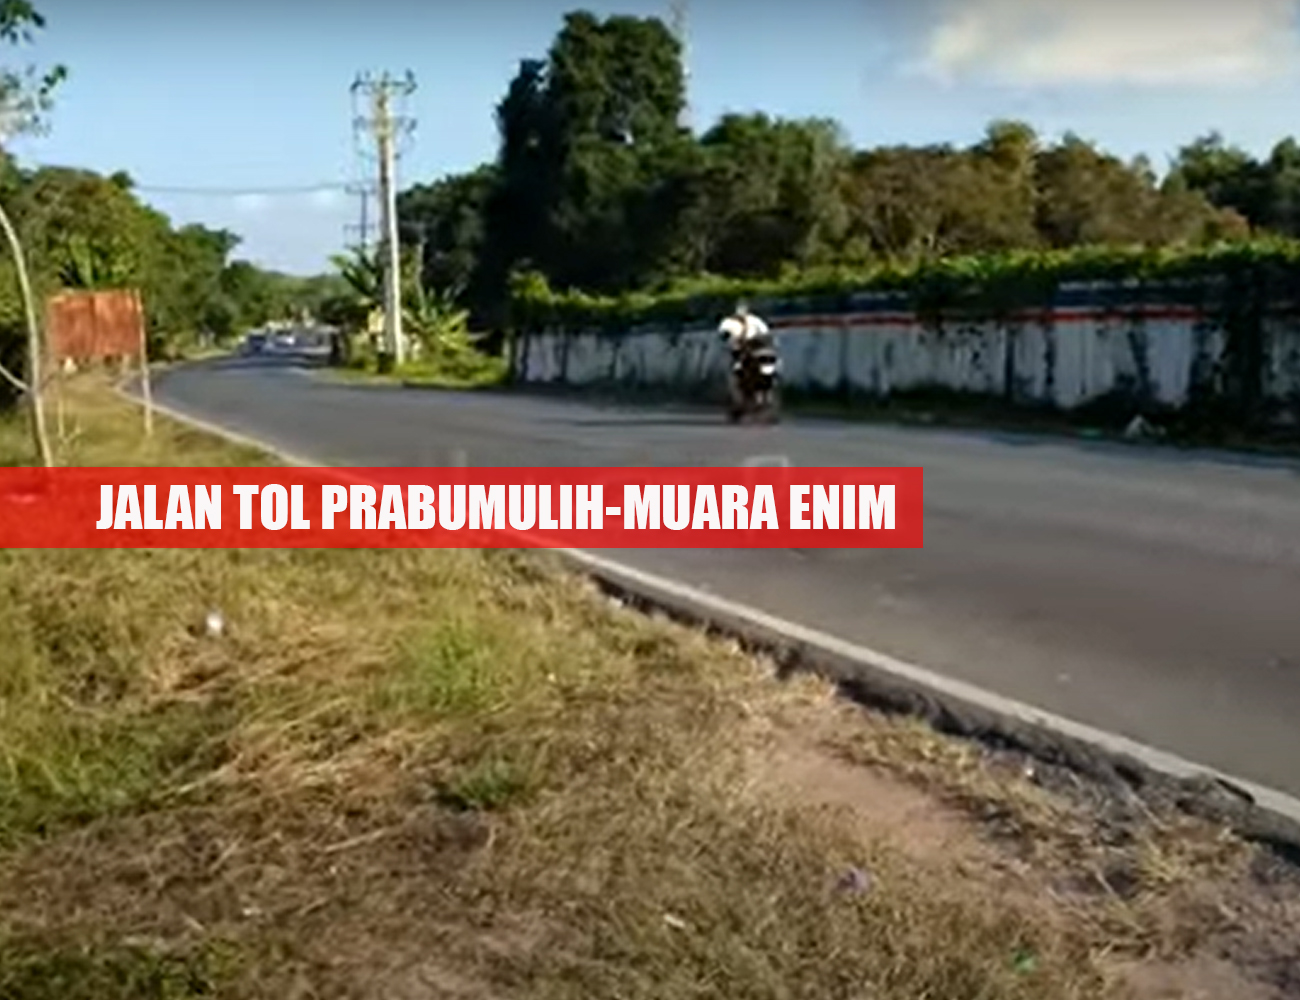 Jalan Tol Indralaya-Prabumulih Sudah Operasi, Tinggal Prabumulih-Muara Enim